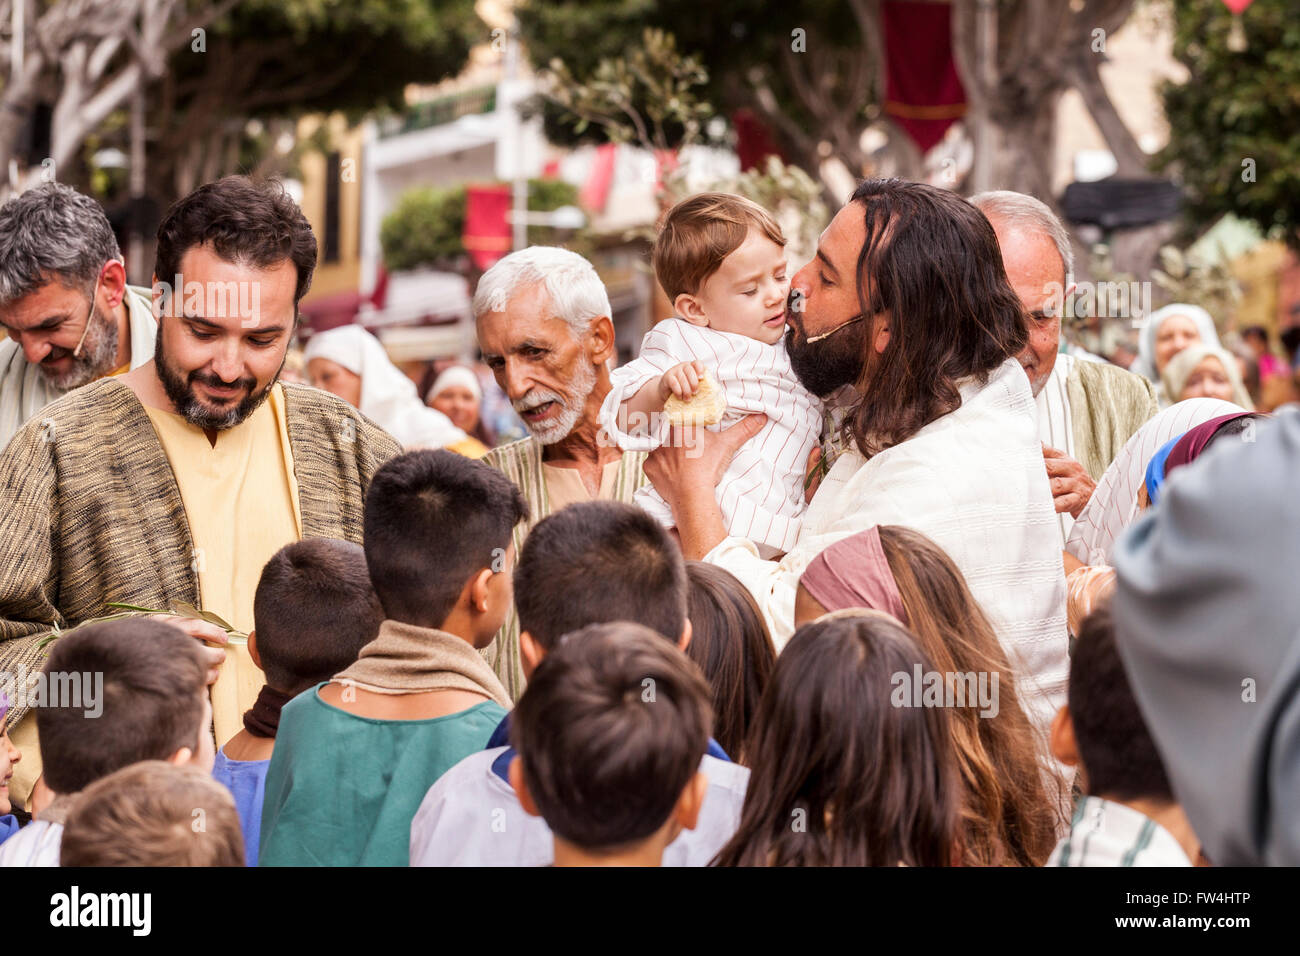 Actor playing Jesus kisses a baby in the Passion play, Adeje, Tenerife, Canary Islands, Spain. Representacion de la Pasion. Adej Stock Photo